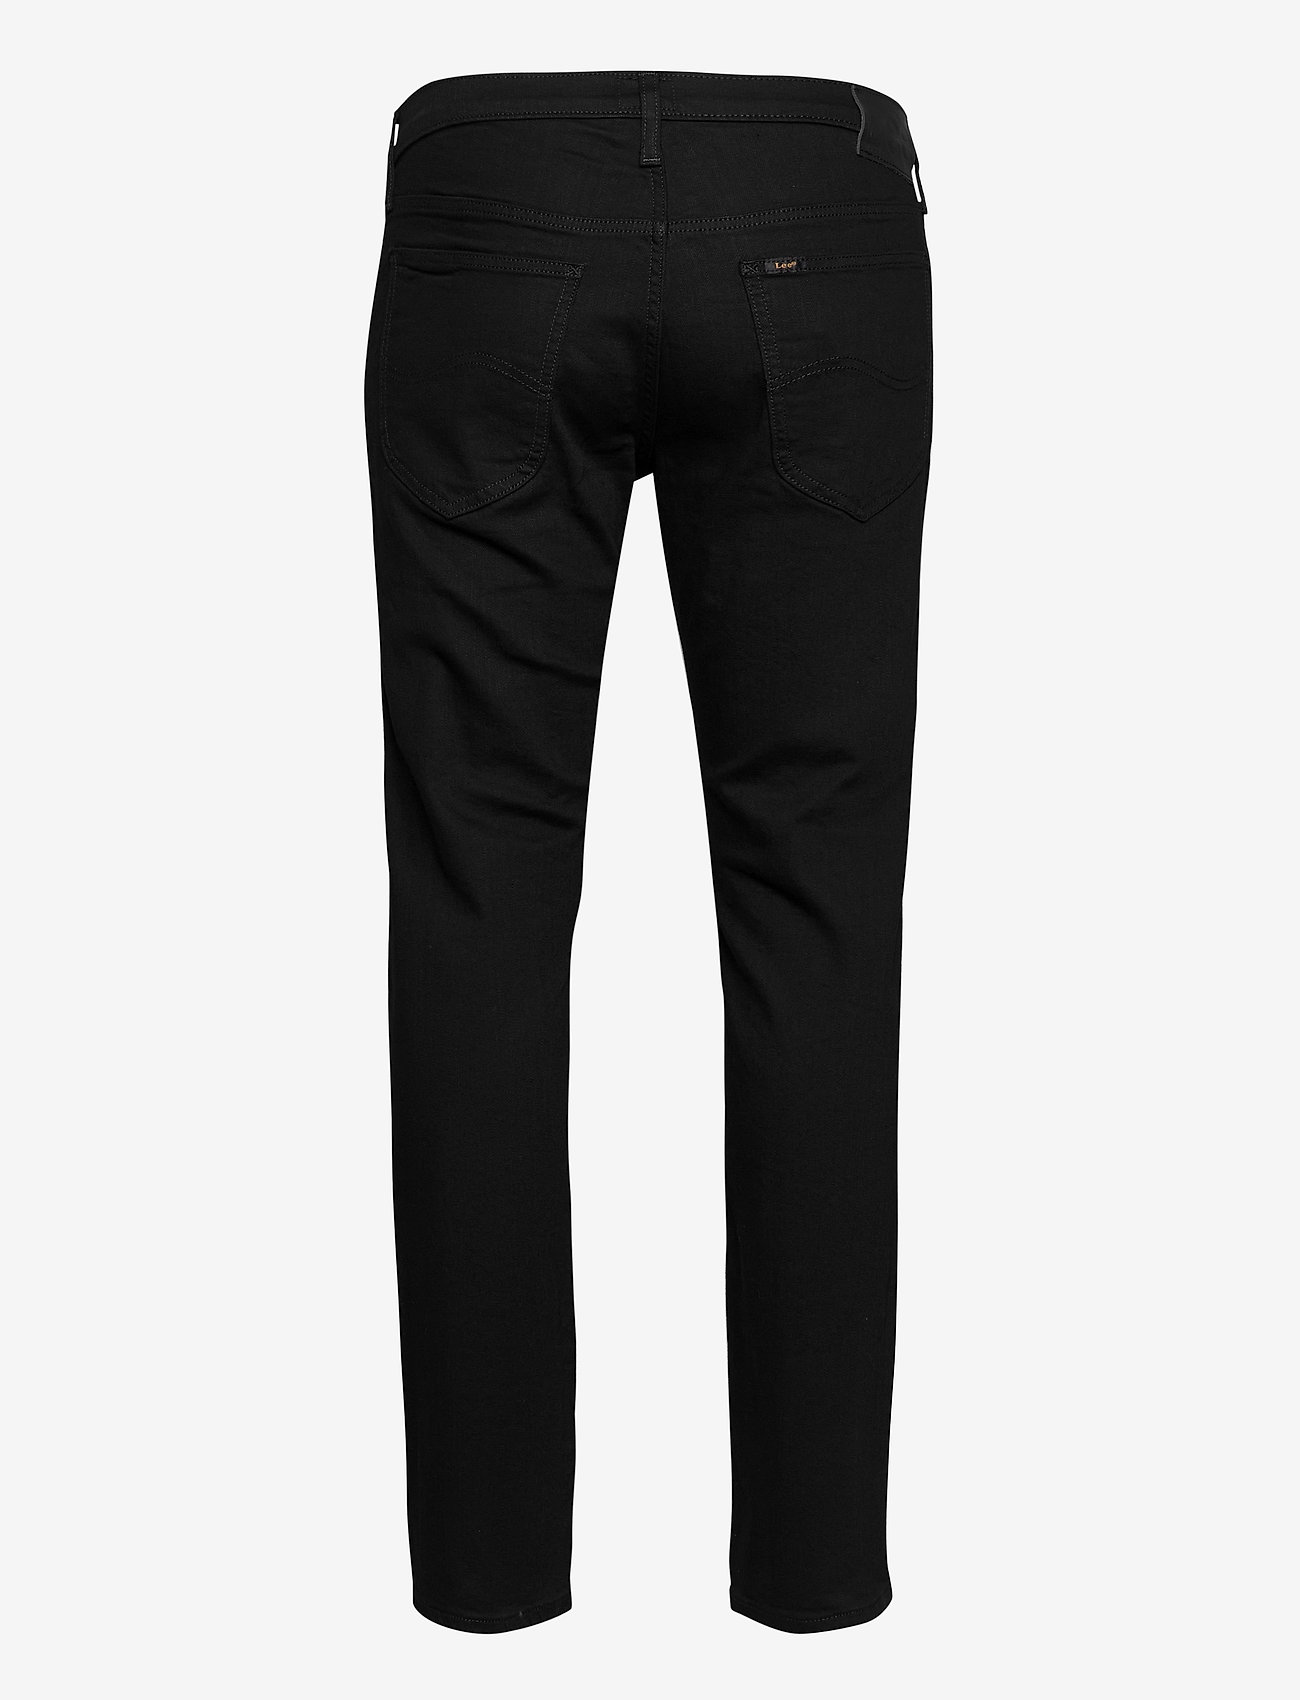 Lee Jeans - DAREN ZIP FLY - Įprasto kirpimo džinsai - clean black - 1